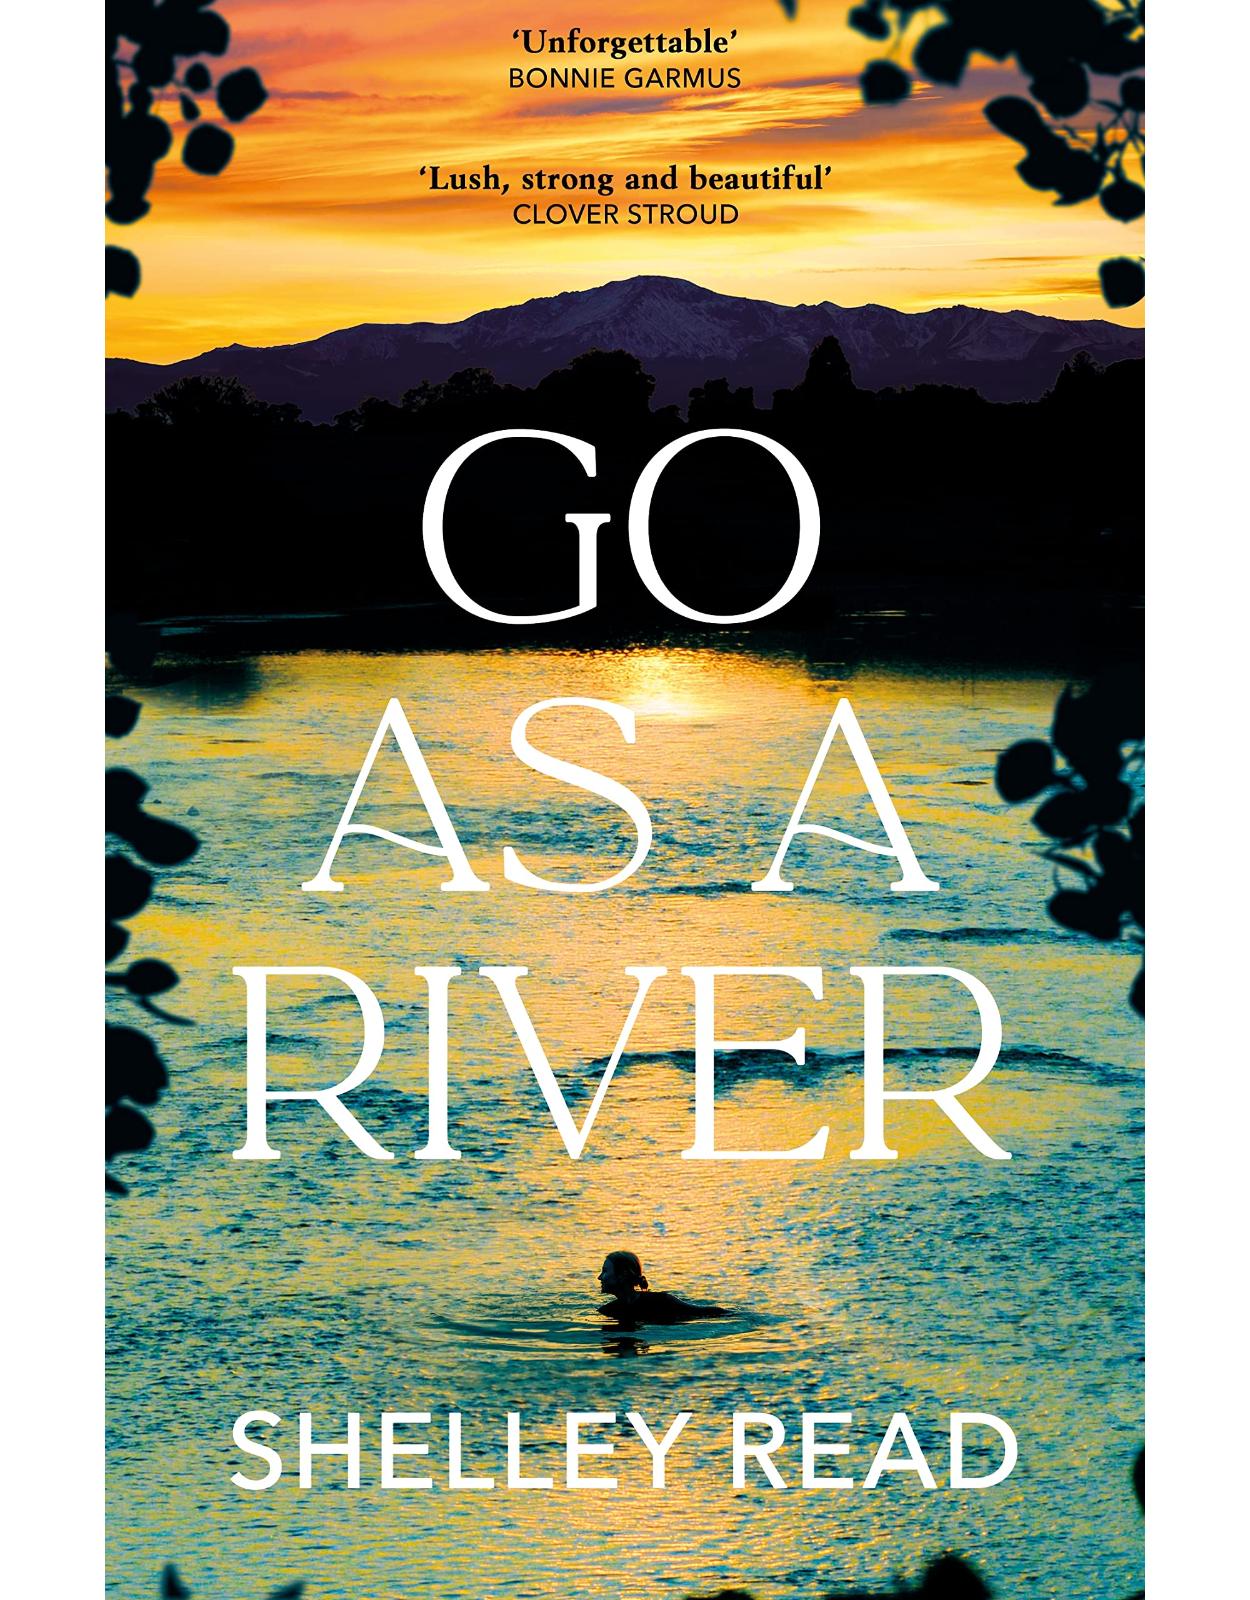 Go as a river